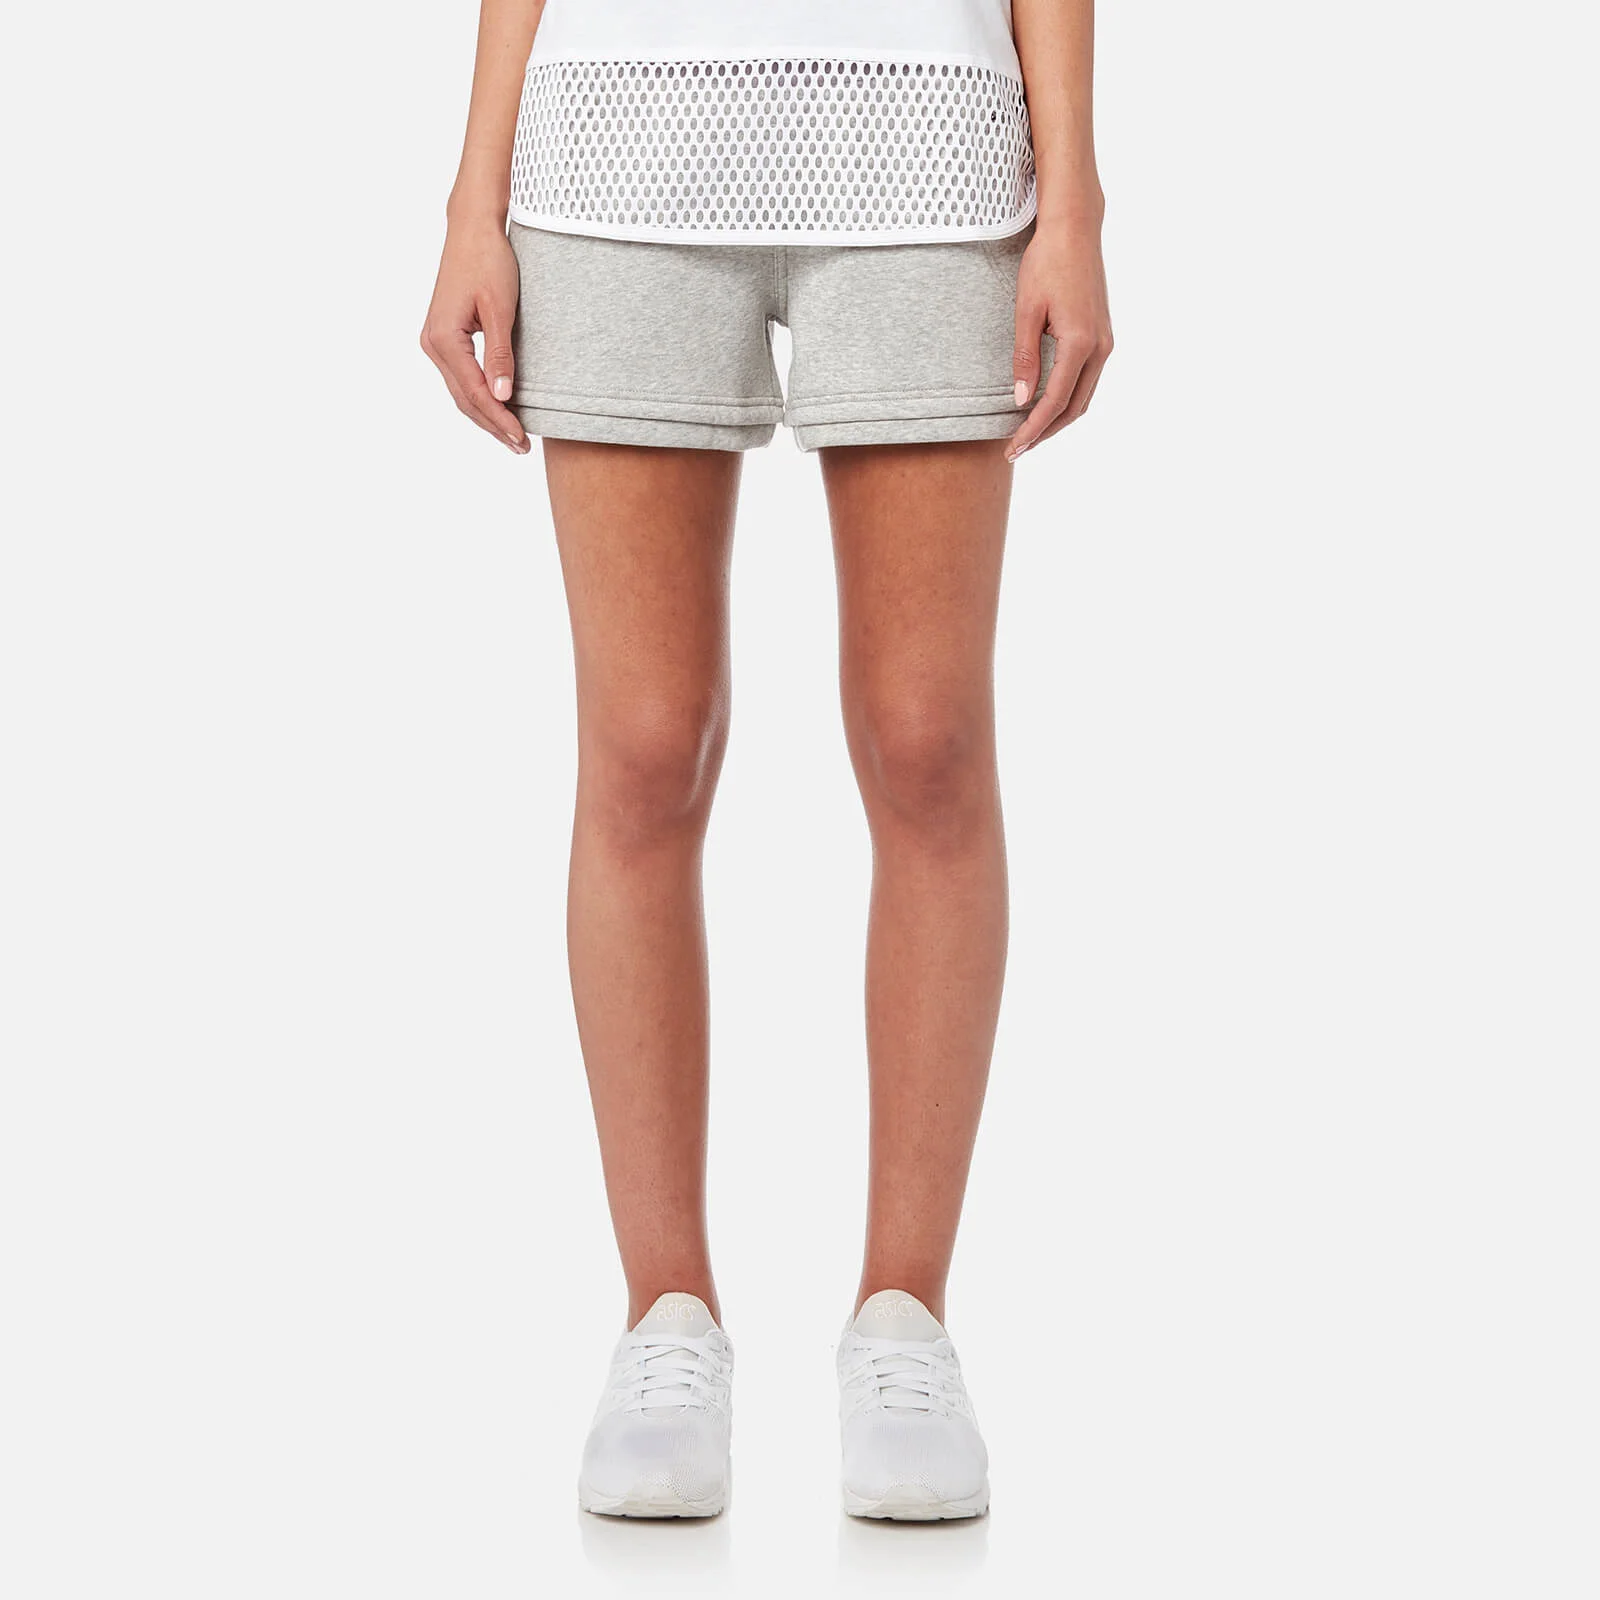 adidas by Stella McCartney Women's Essential Knit Shorts - Marble Grey Heather Image 1